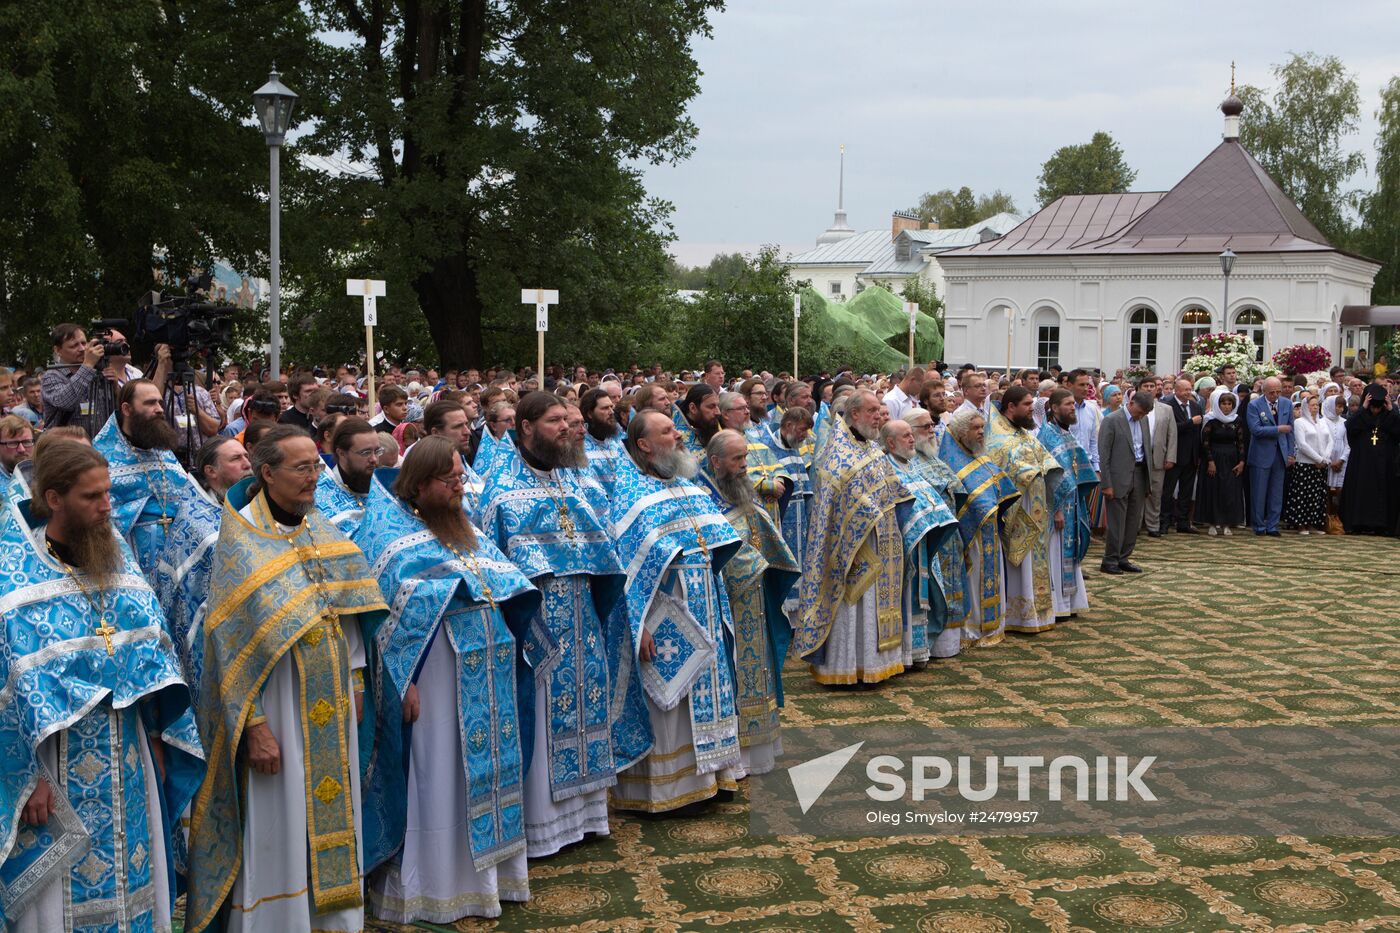 Svyato-Vvedensky Tolgsky Convent in Yaroslavl celebrates 700th anniversary